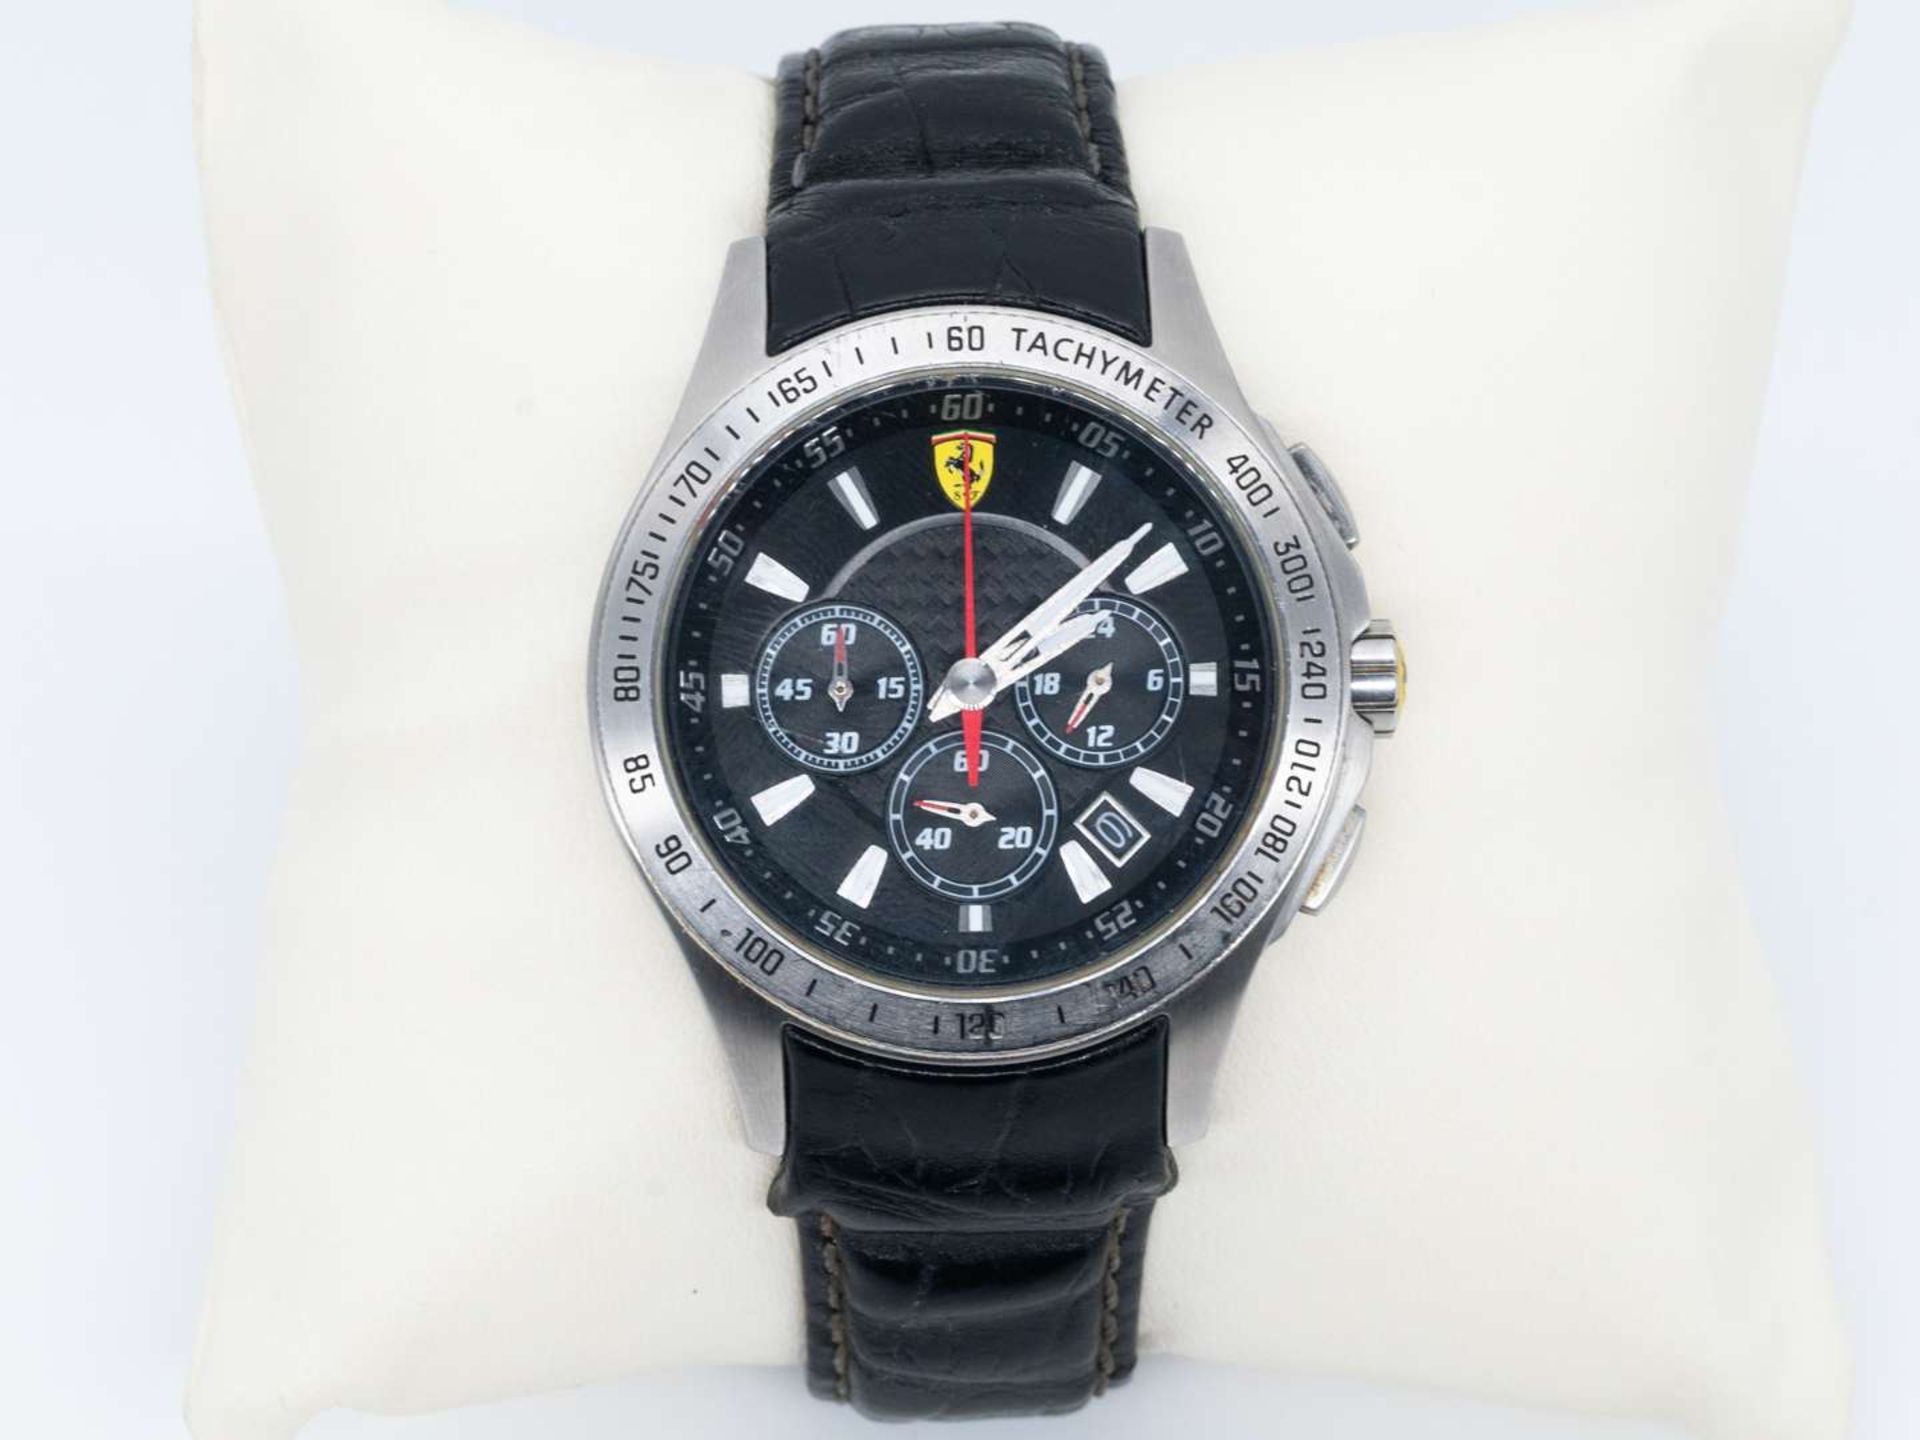 FERRARI, Scuderia, a quartz, stainless steel, two button chronograph wristwatch.